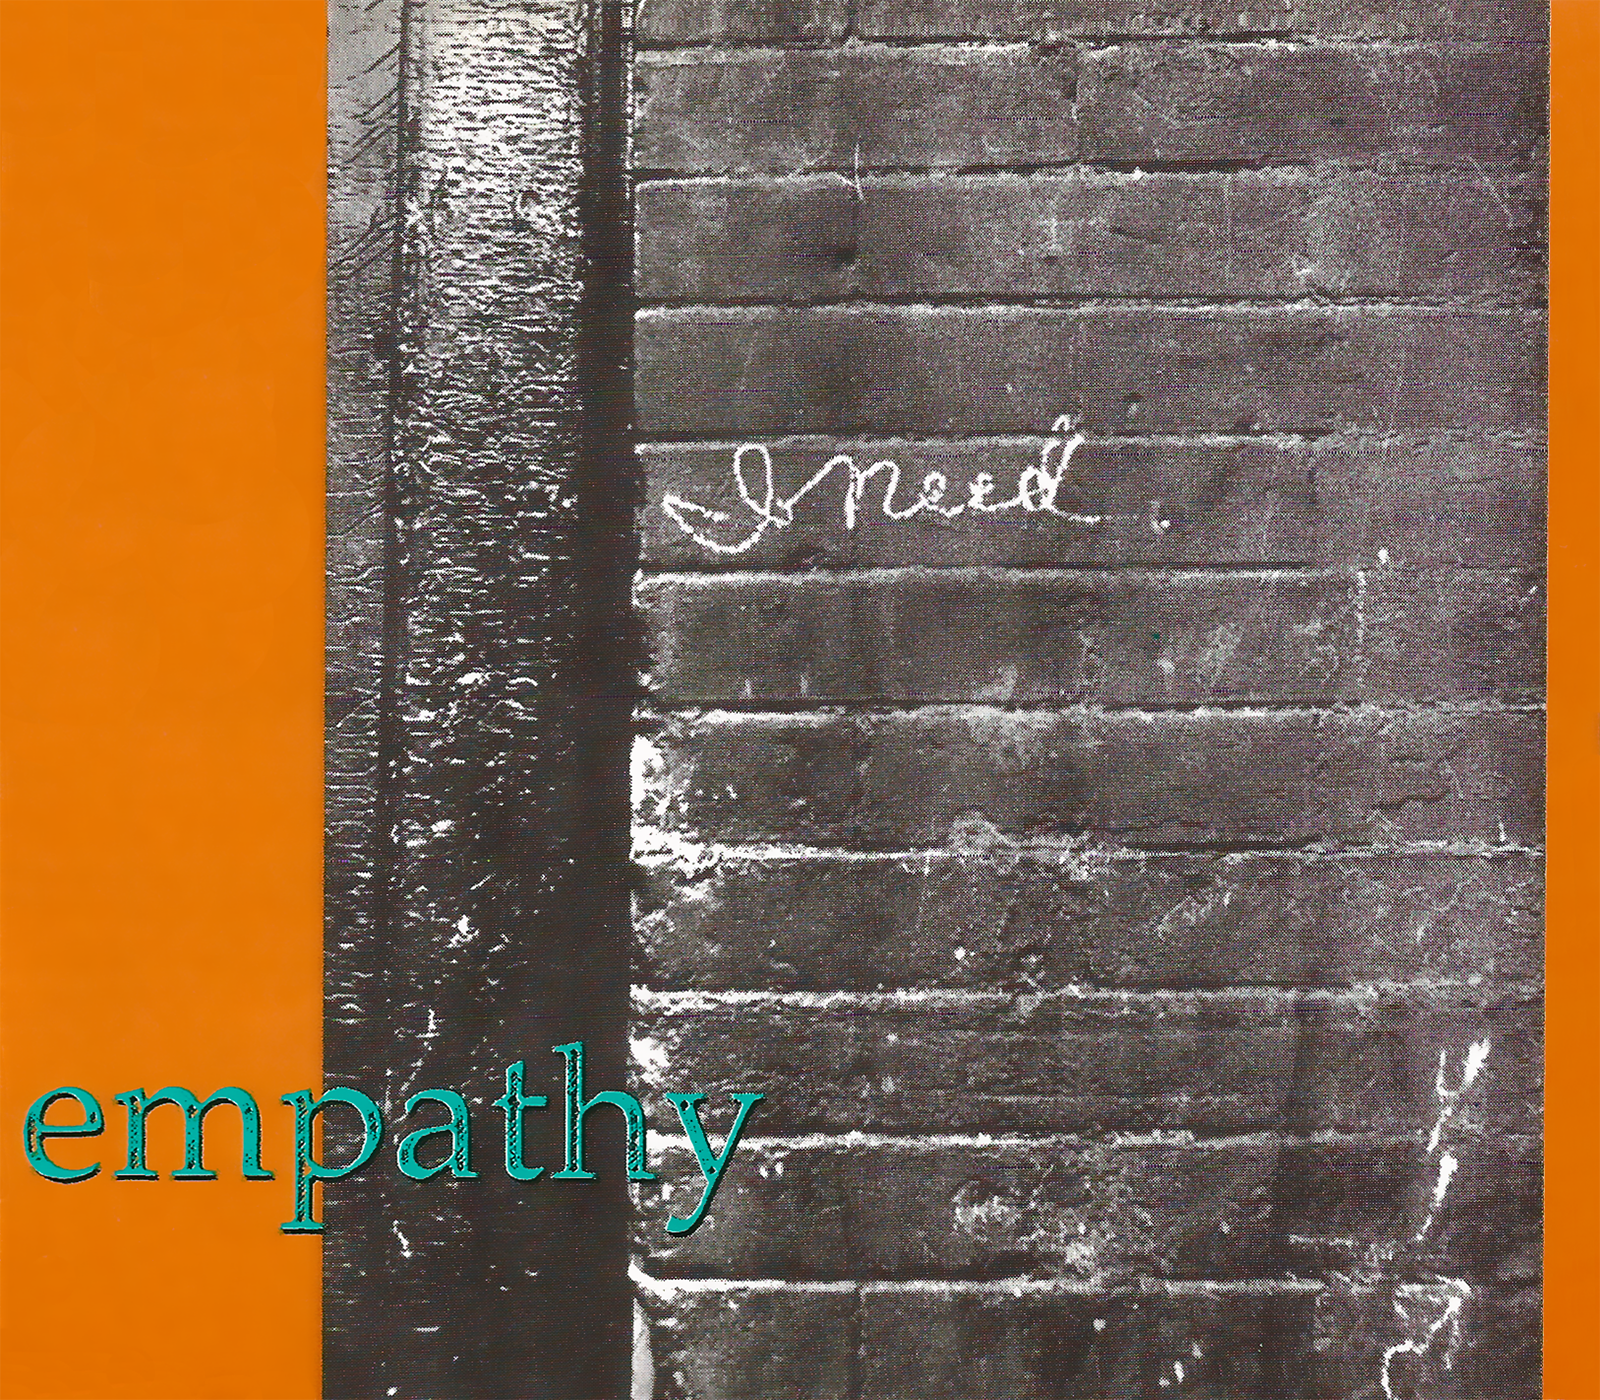 Cascade Records 2º - Empathy "I Need", CD/12 vinyl, 1996